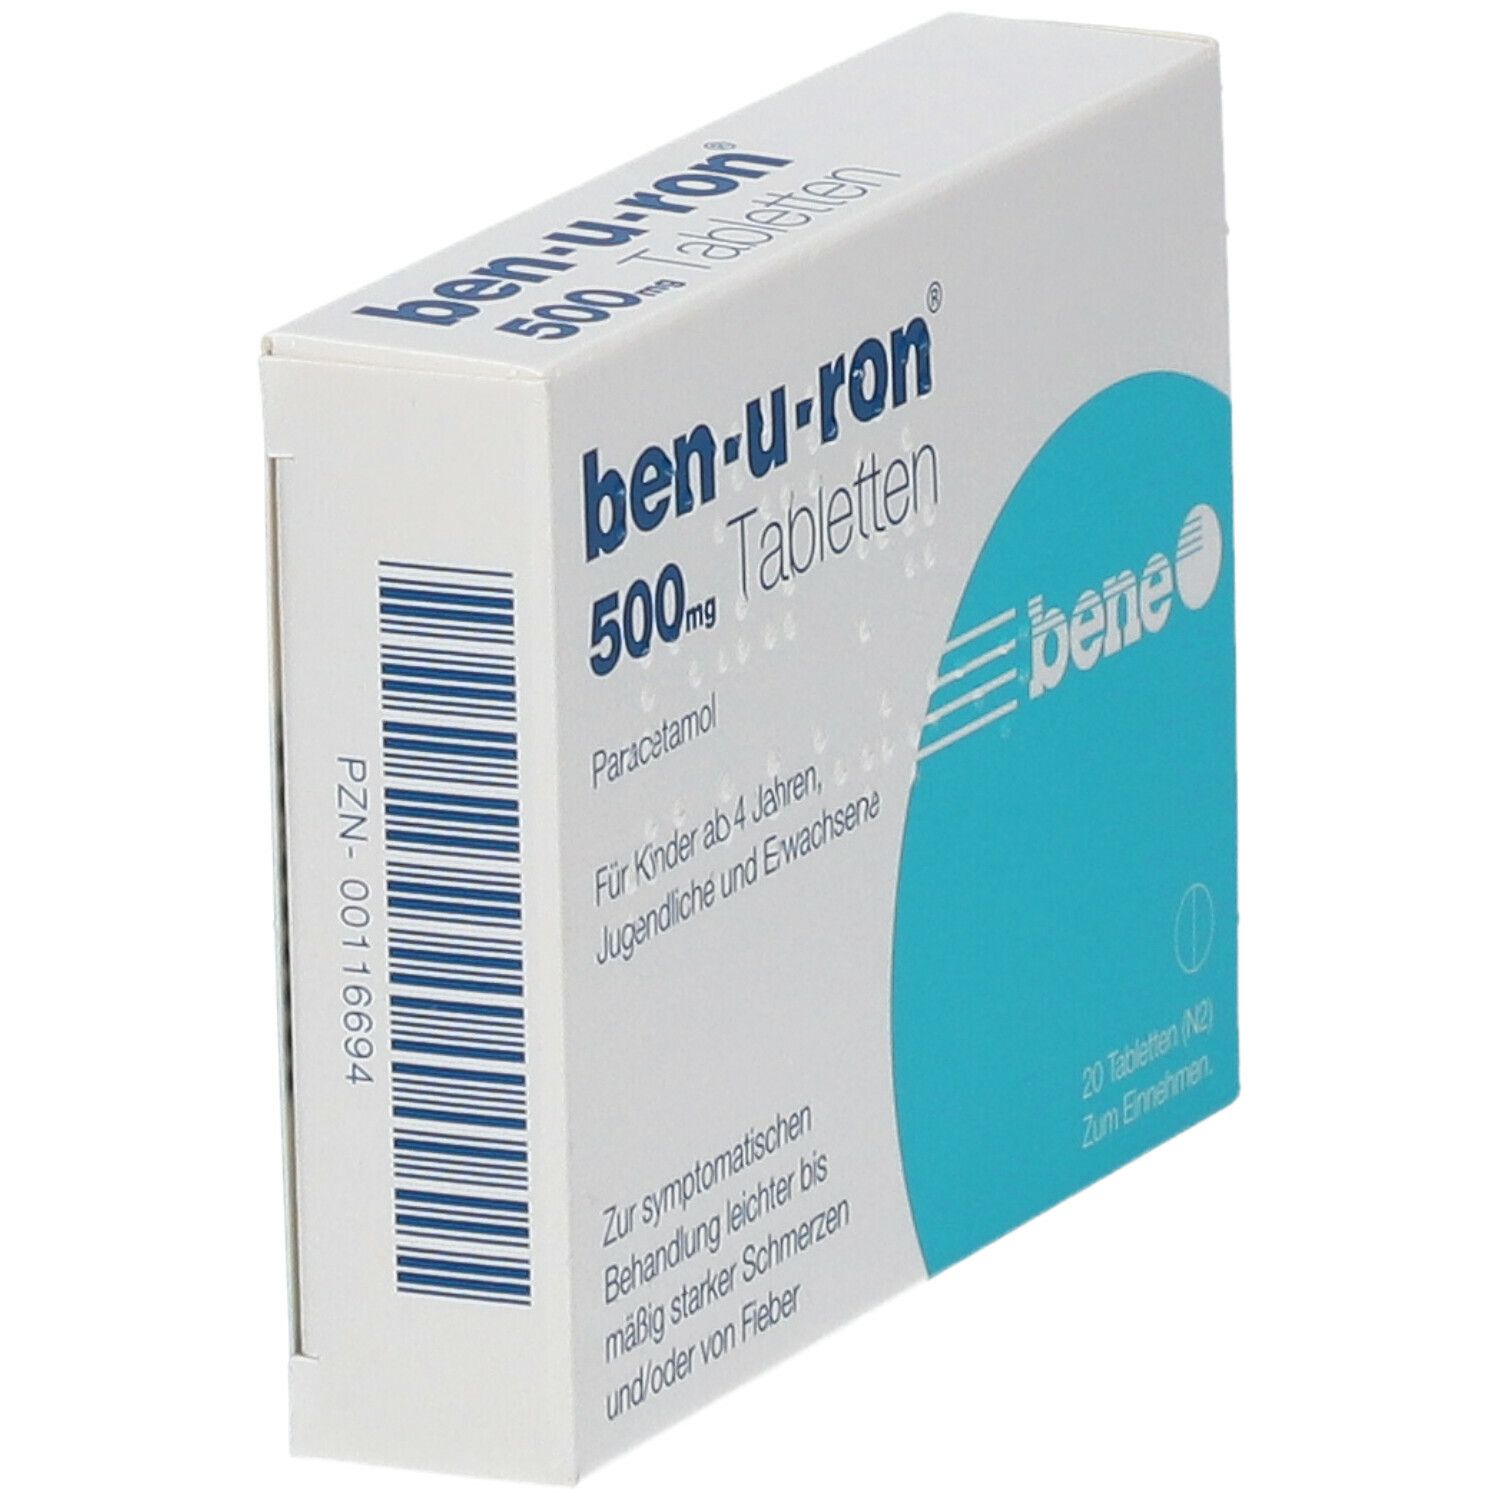 ben-u-ron® 500 mg